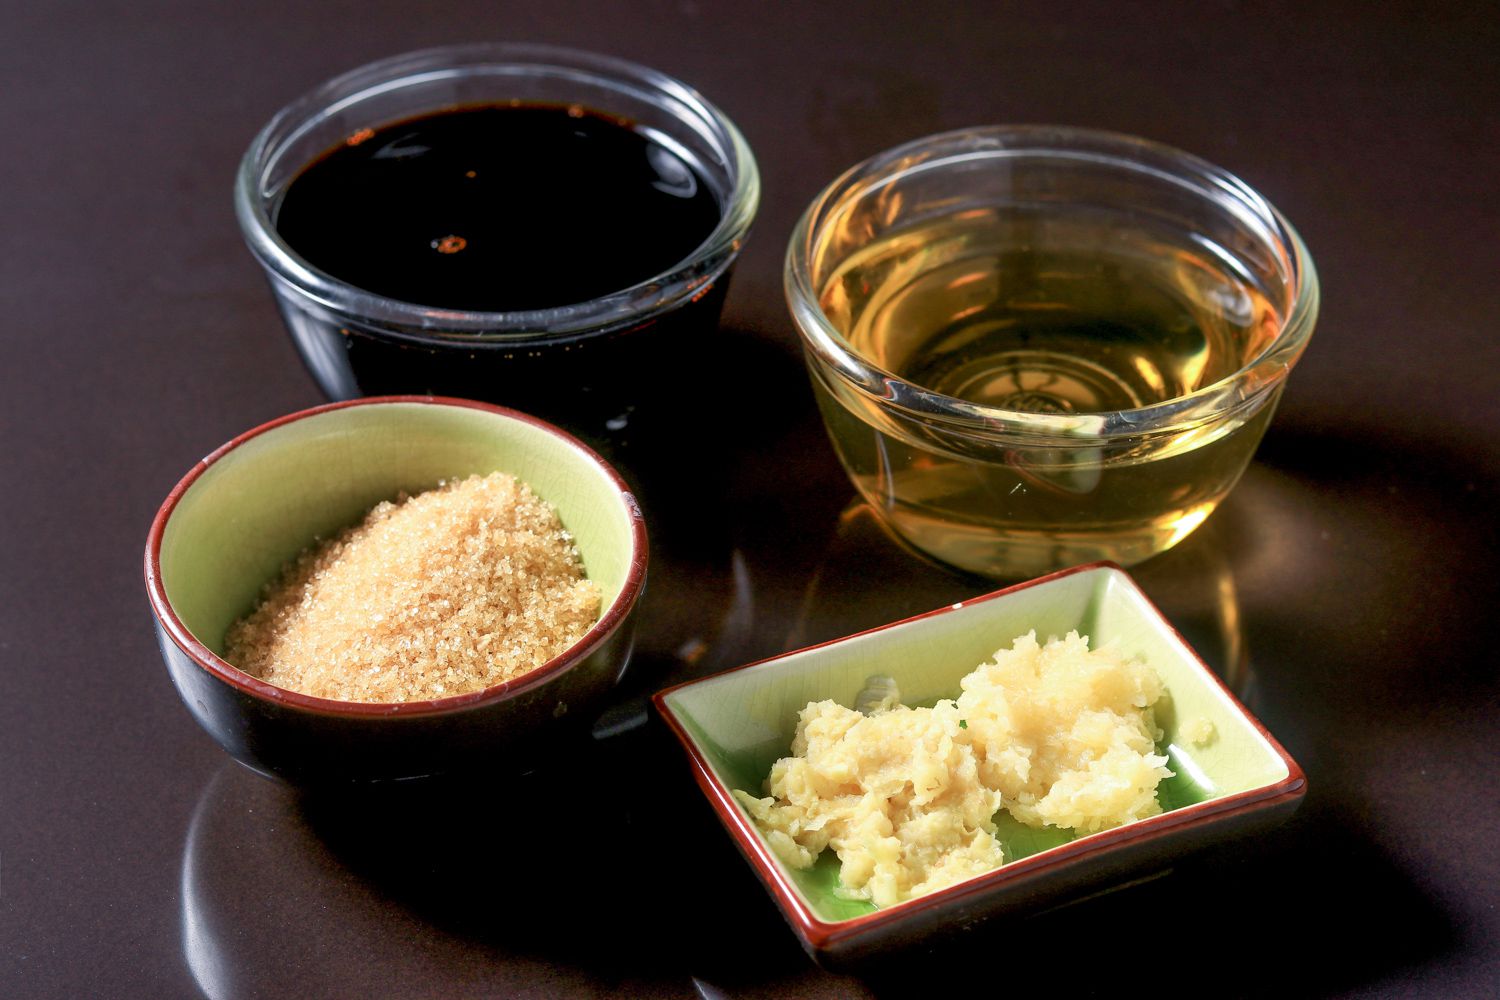 Japanese Restaurant Style Teriyaki Sauce Recipe,High Efficiency Washer Detergent